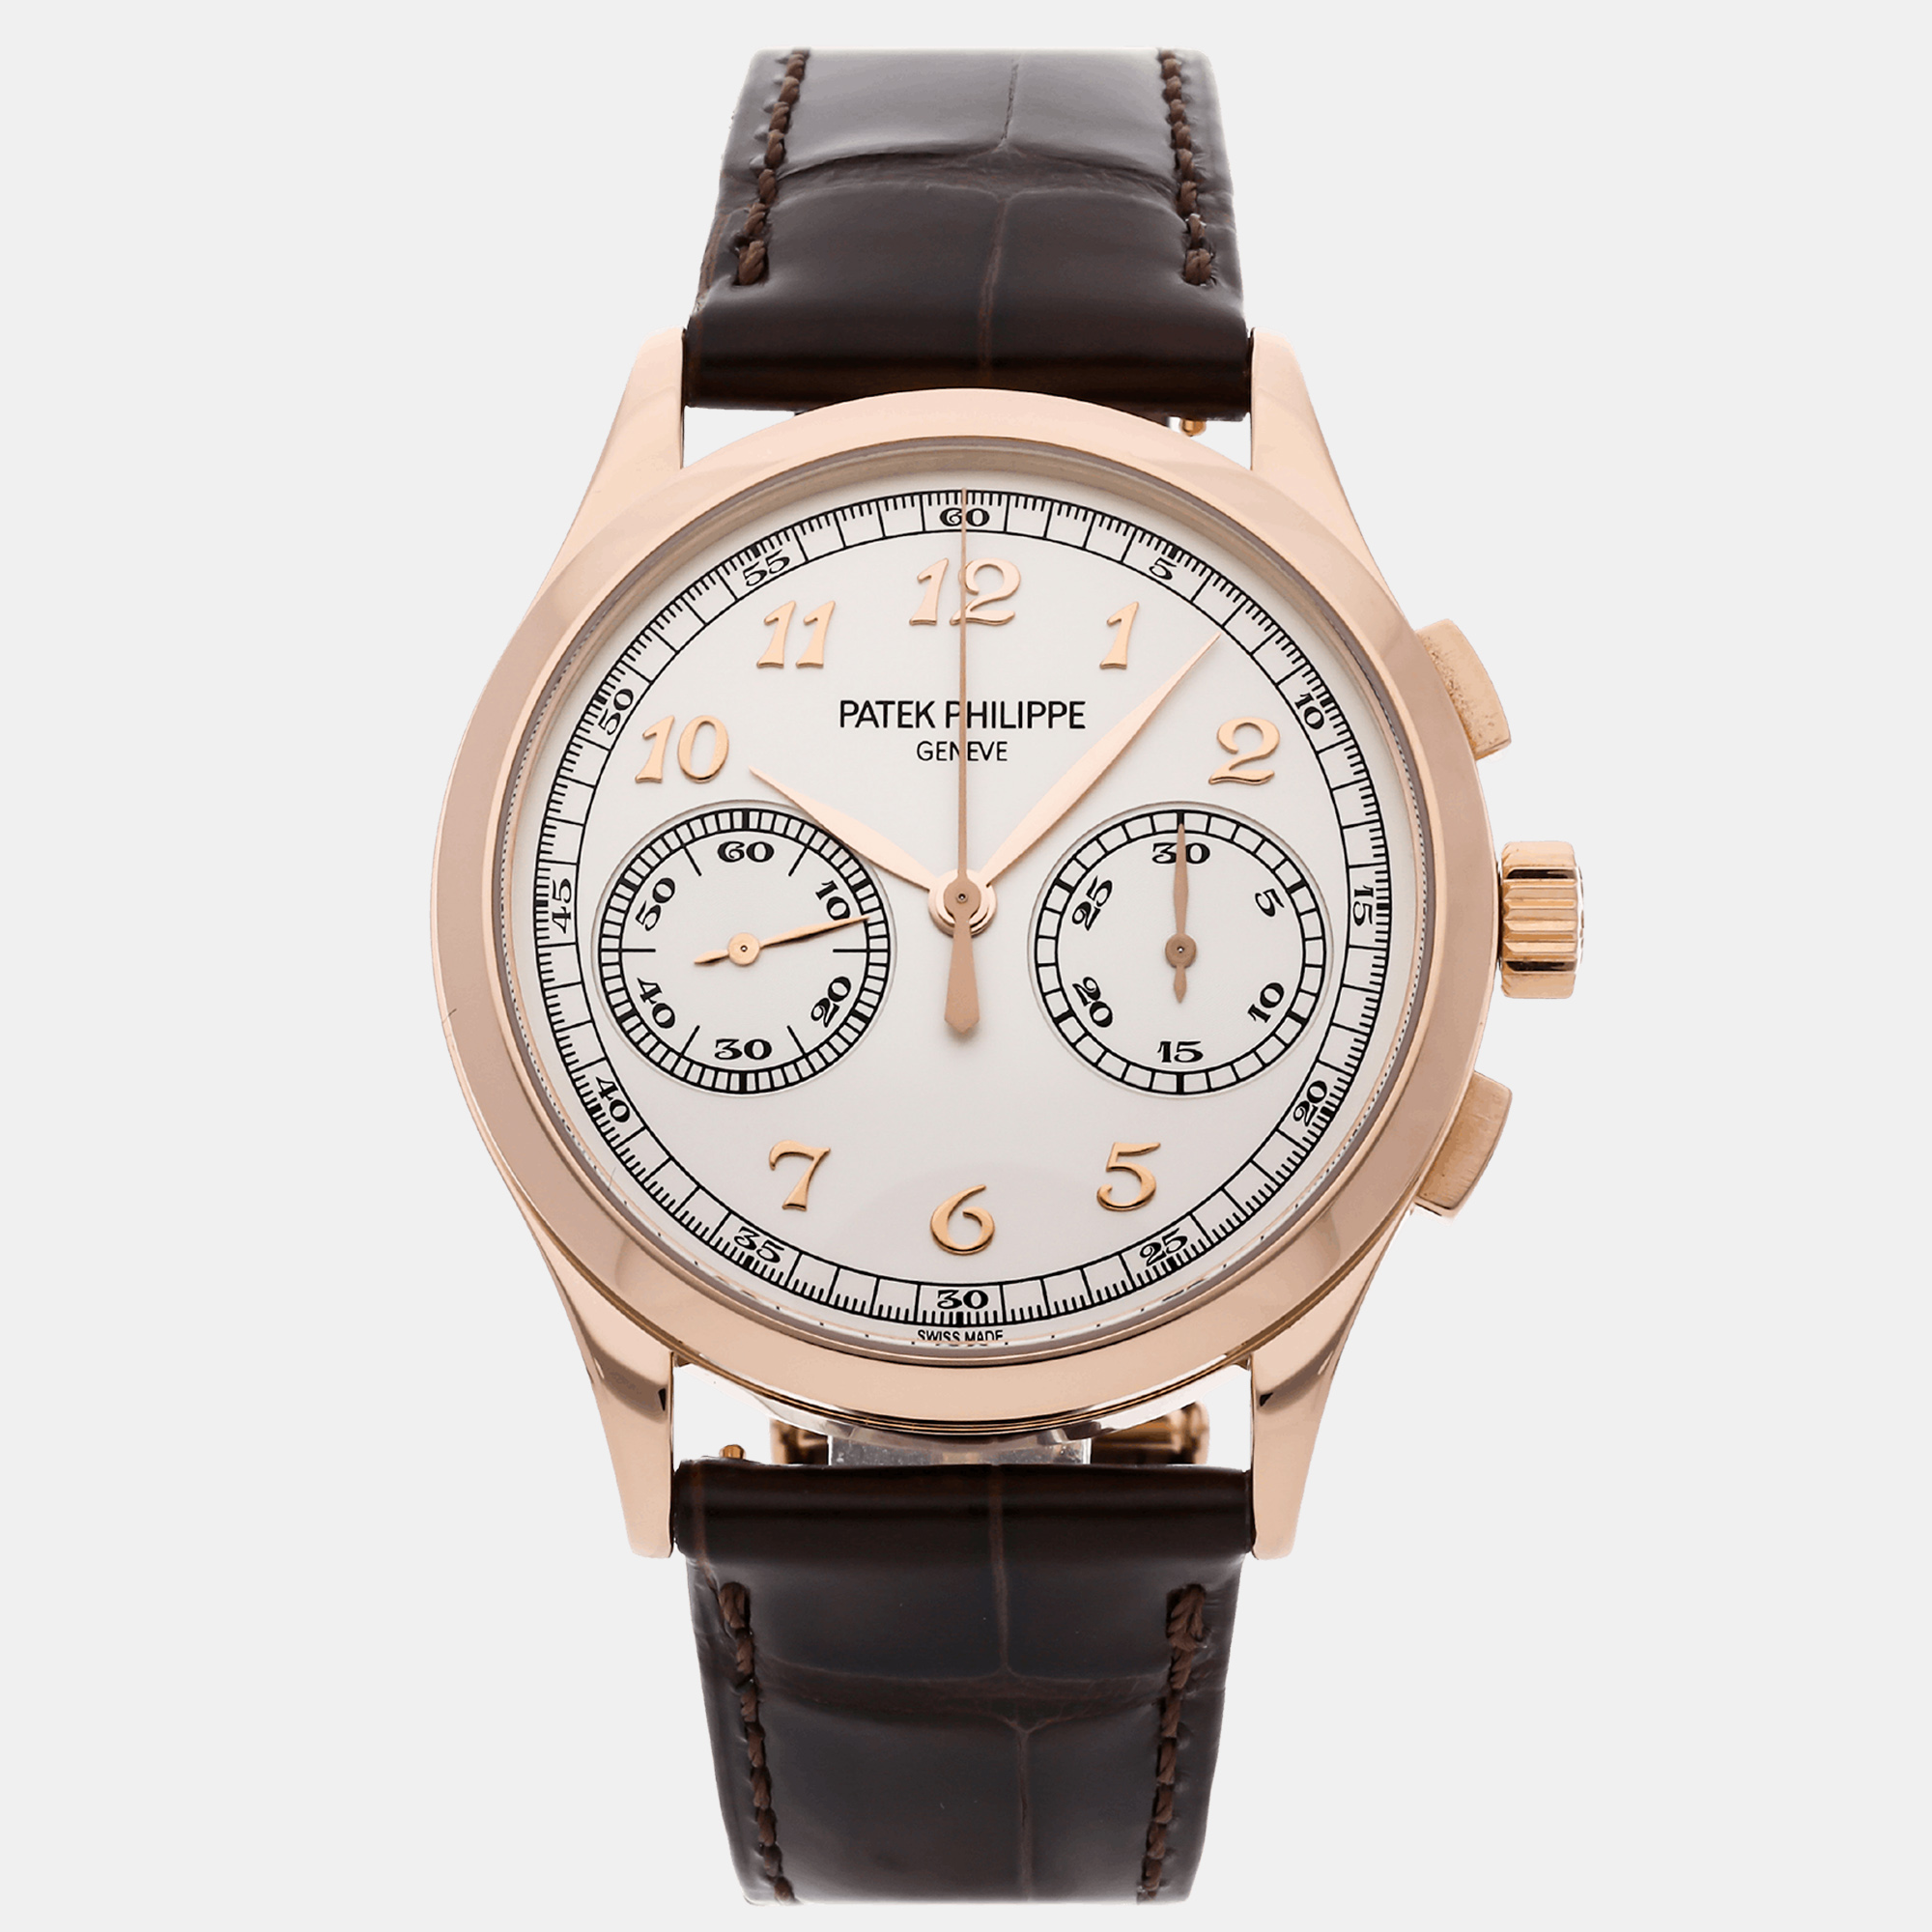 Patek philippe silver 18k rose gold complications chronograph 5170r-001 manual winding men's wristwatch 39 mm